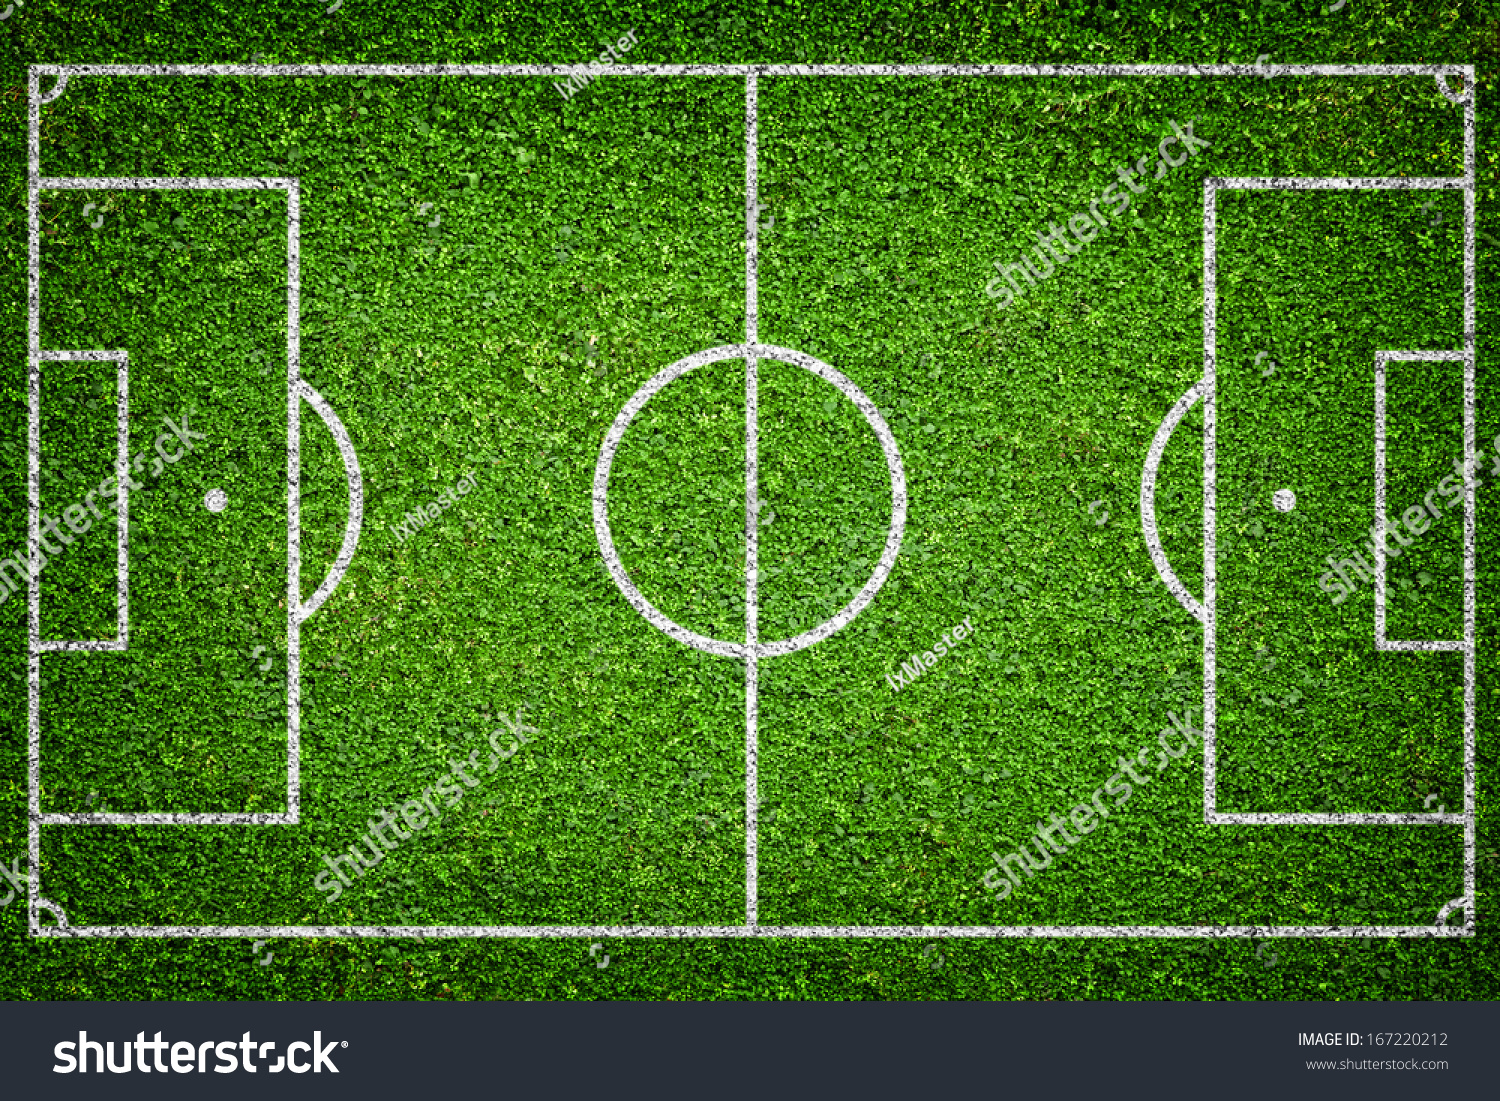 Closeup Image Of Natural Green Grass Soccer Field Stock Photo 167220212 ...